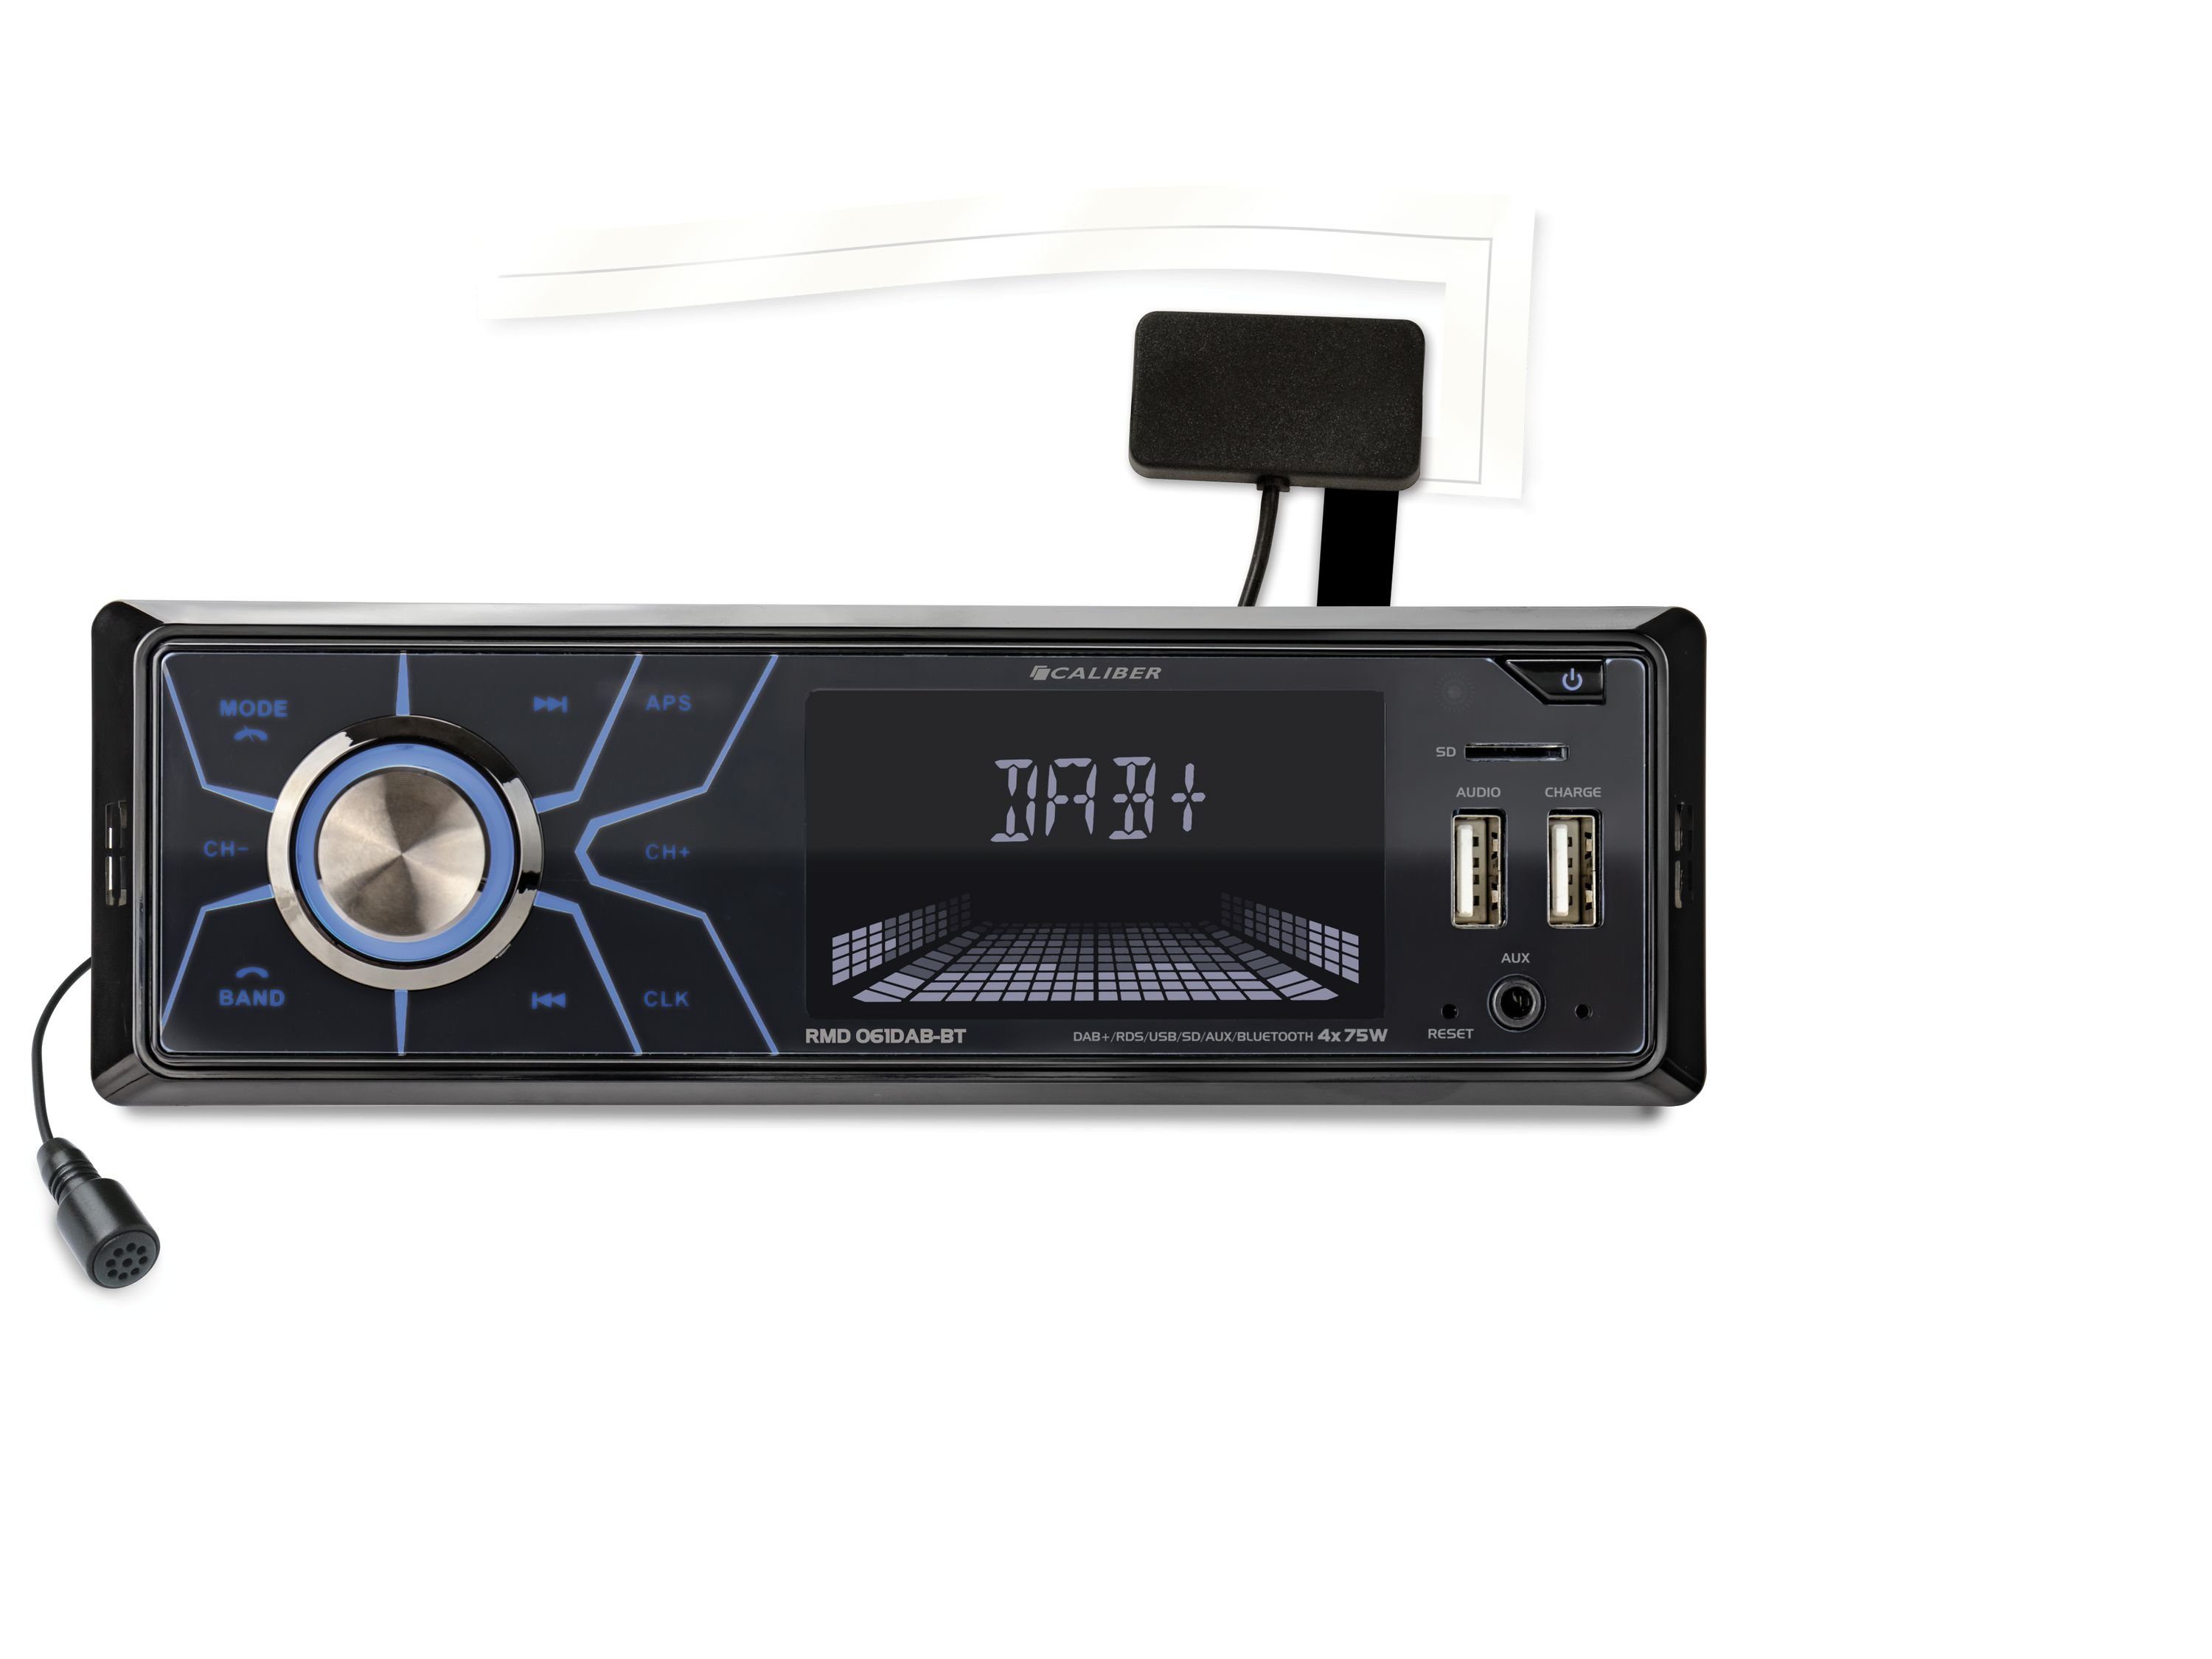 4x FM Caliber 75Watt DAB+ SD Schwarz Autoradio USB Tuner RMD061DAB-BT Bluetooth